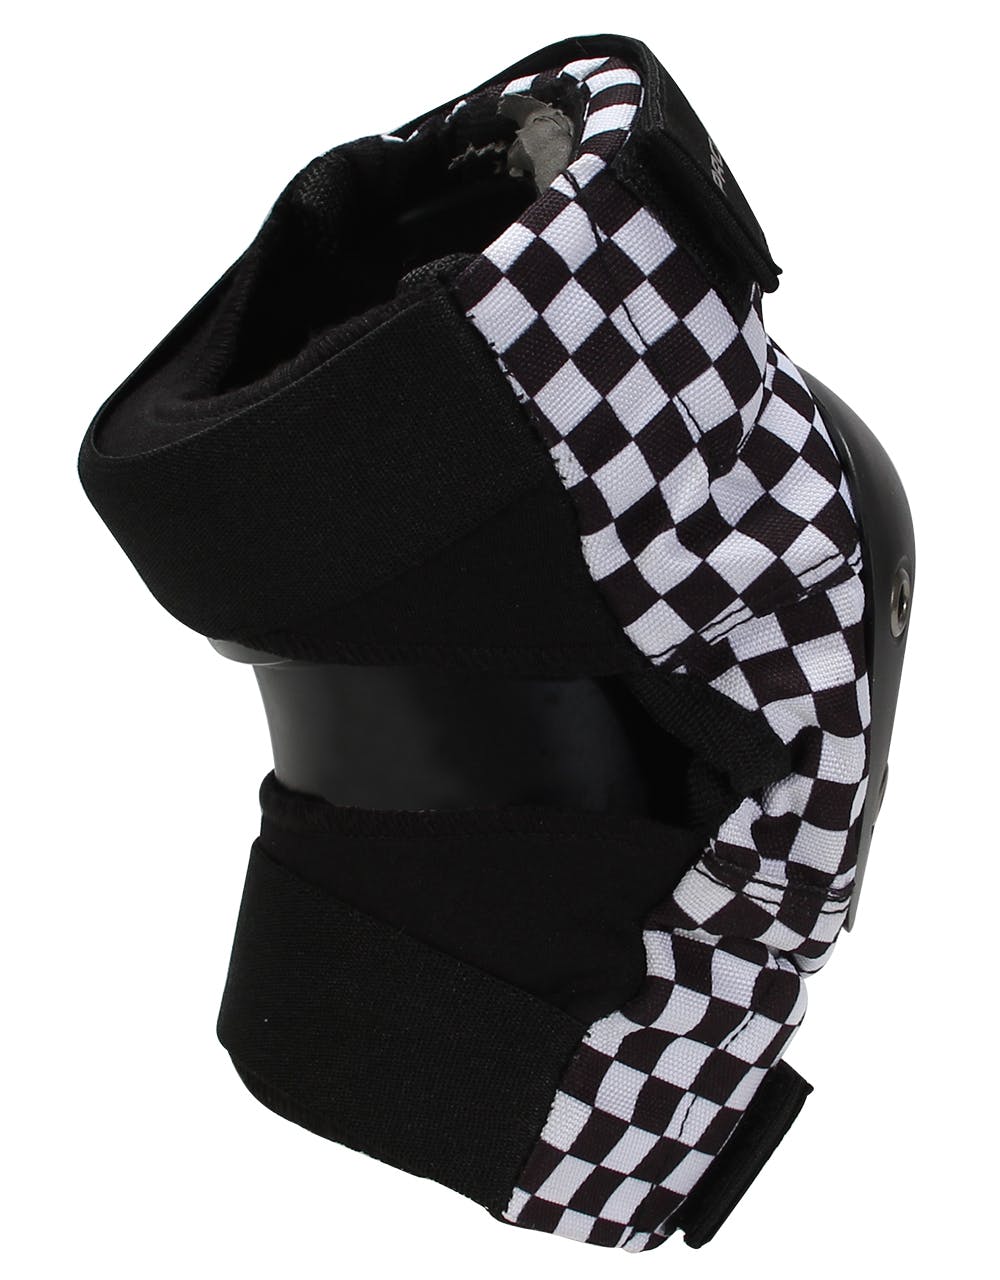 Pro-Tec Street Junior Elbow Pads - Black/White Checker